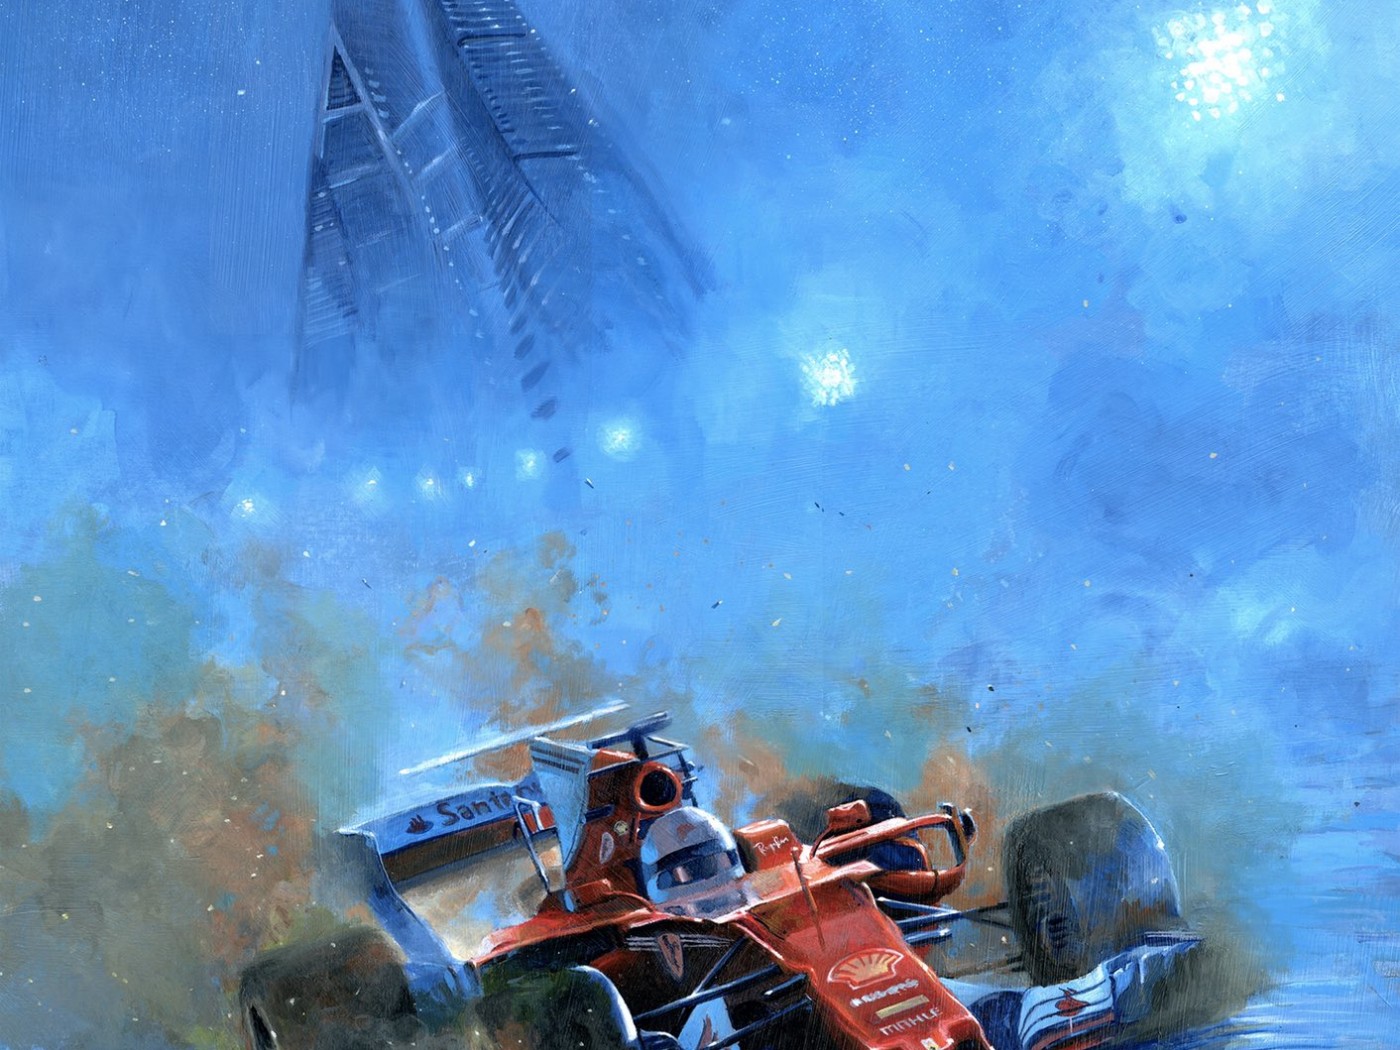 Scuderia Formula1 Poster - Bahrein